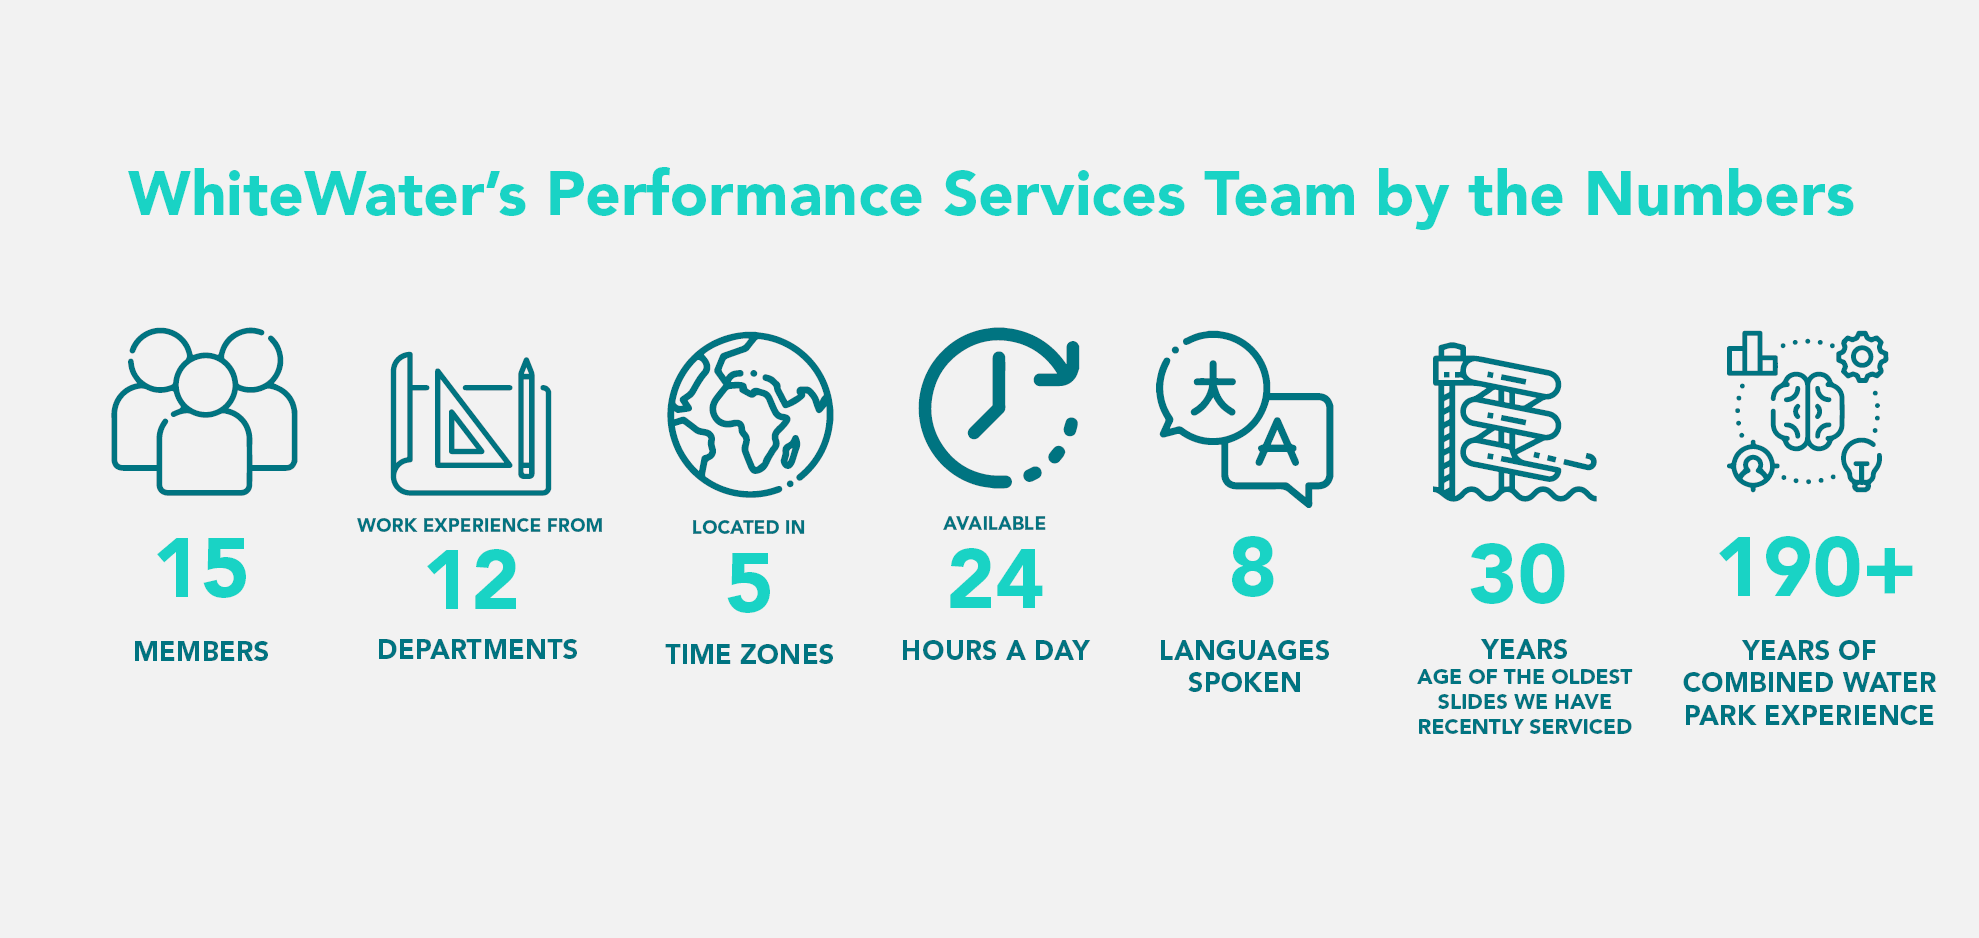 Performance Services Team statistics